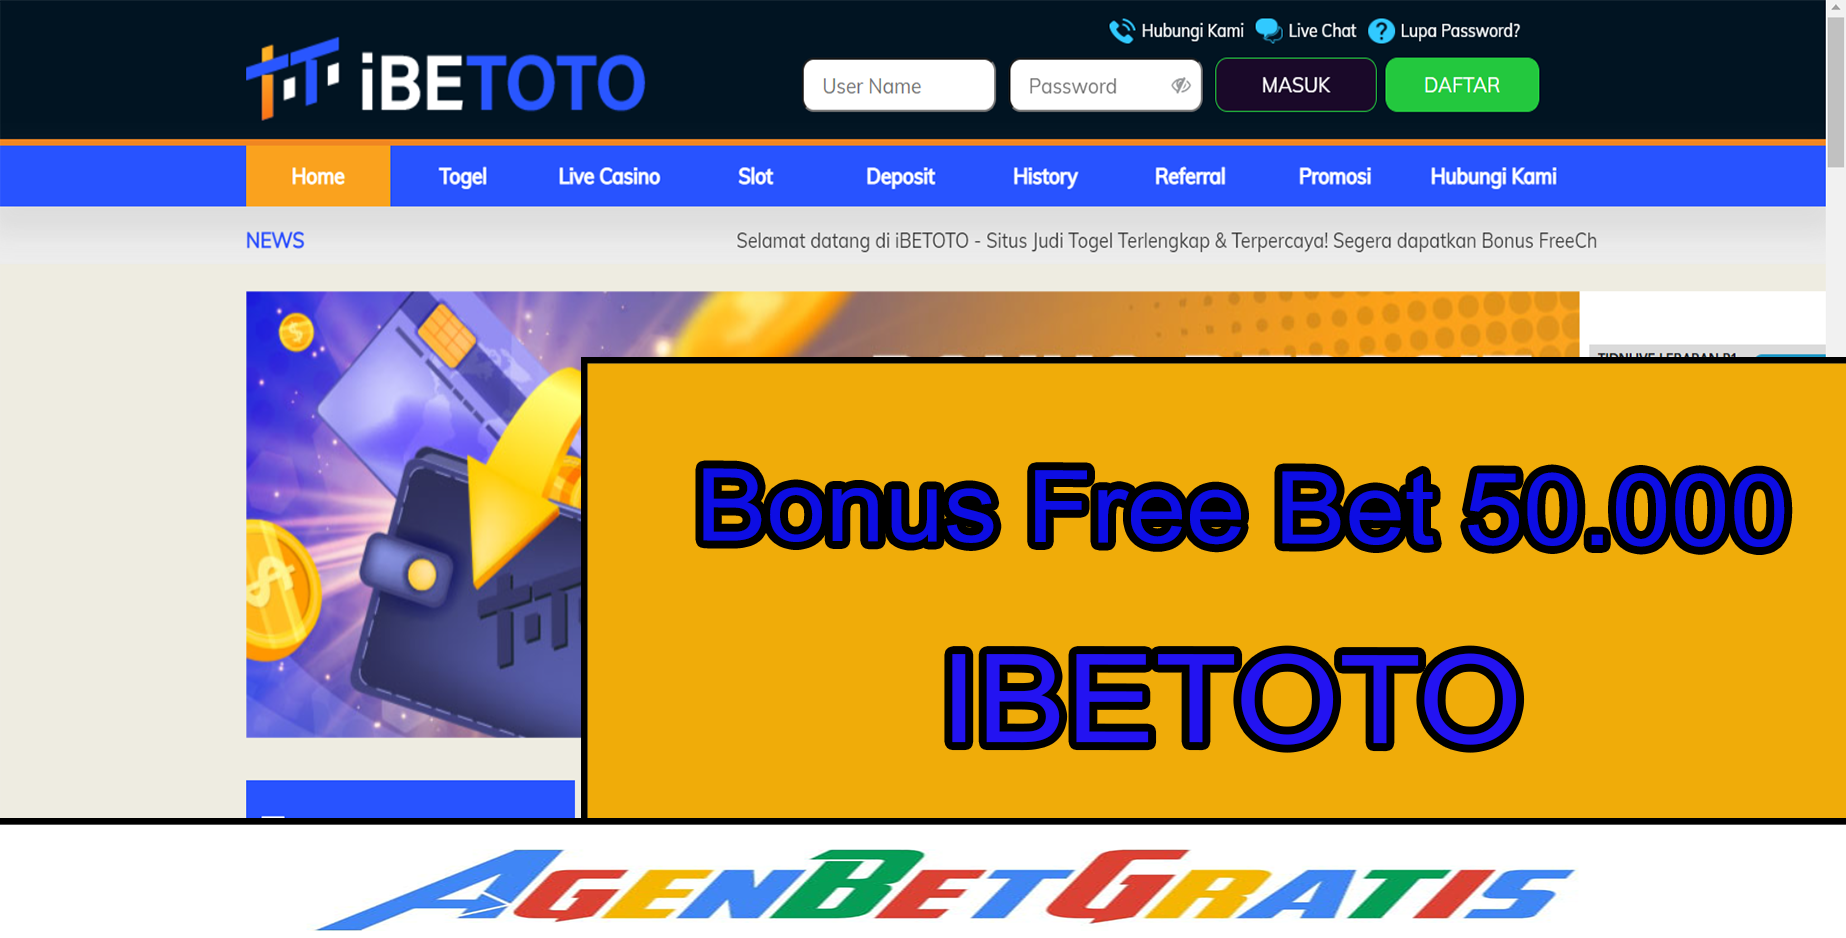 IBETOTO - Bonus FreeBet 50.000